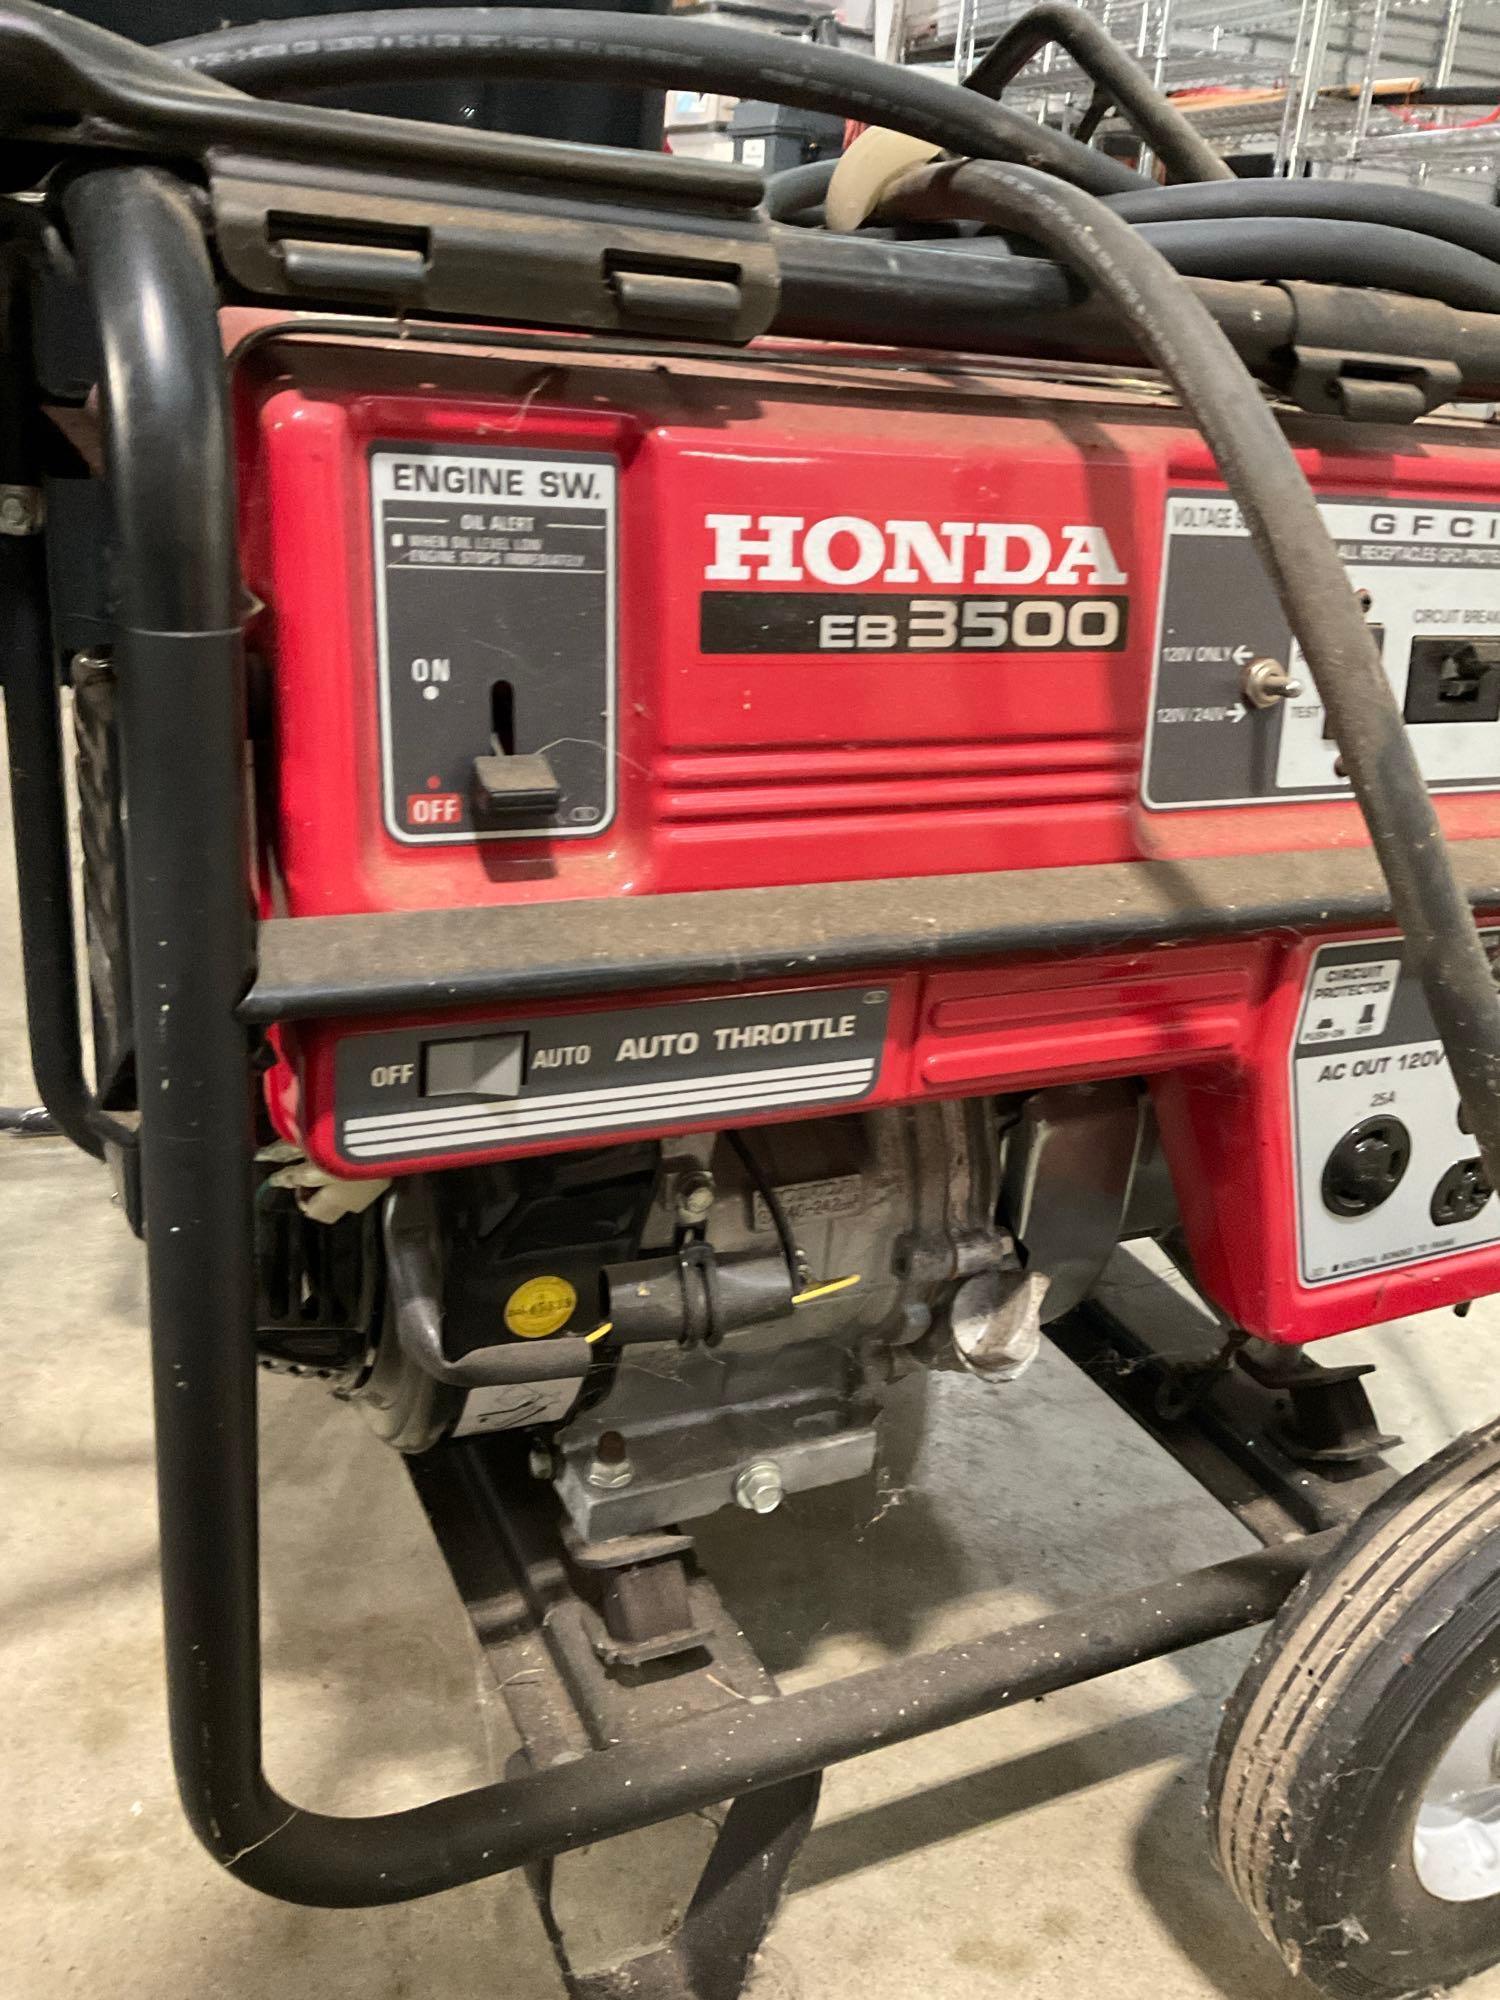 Honda EB3500 Gas Powered Generator - See pics